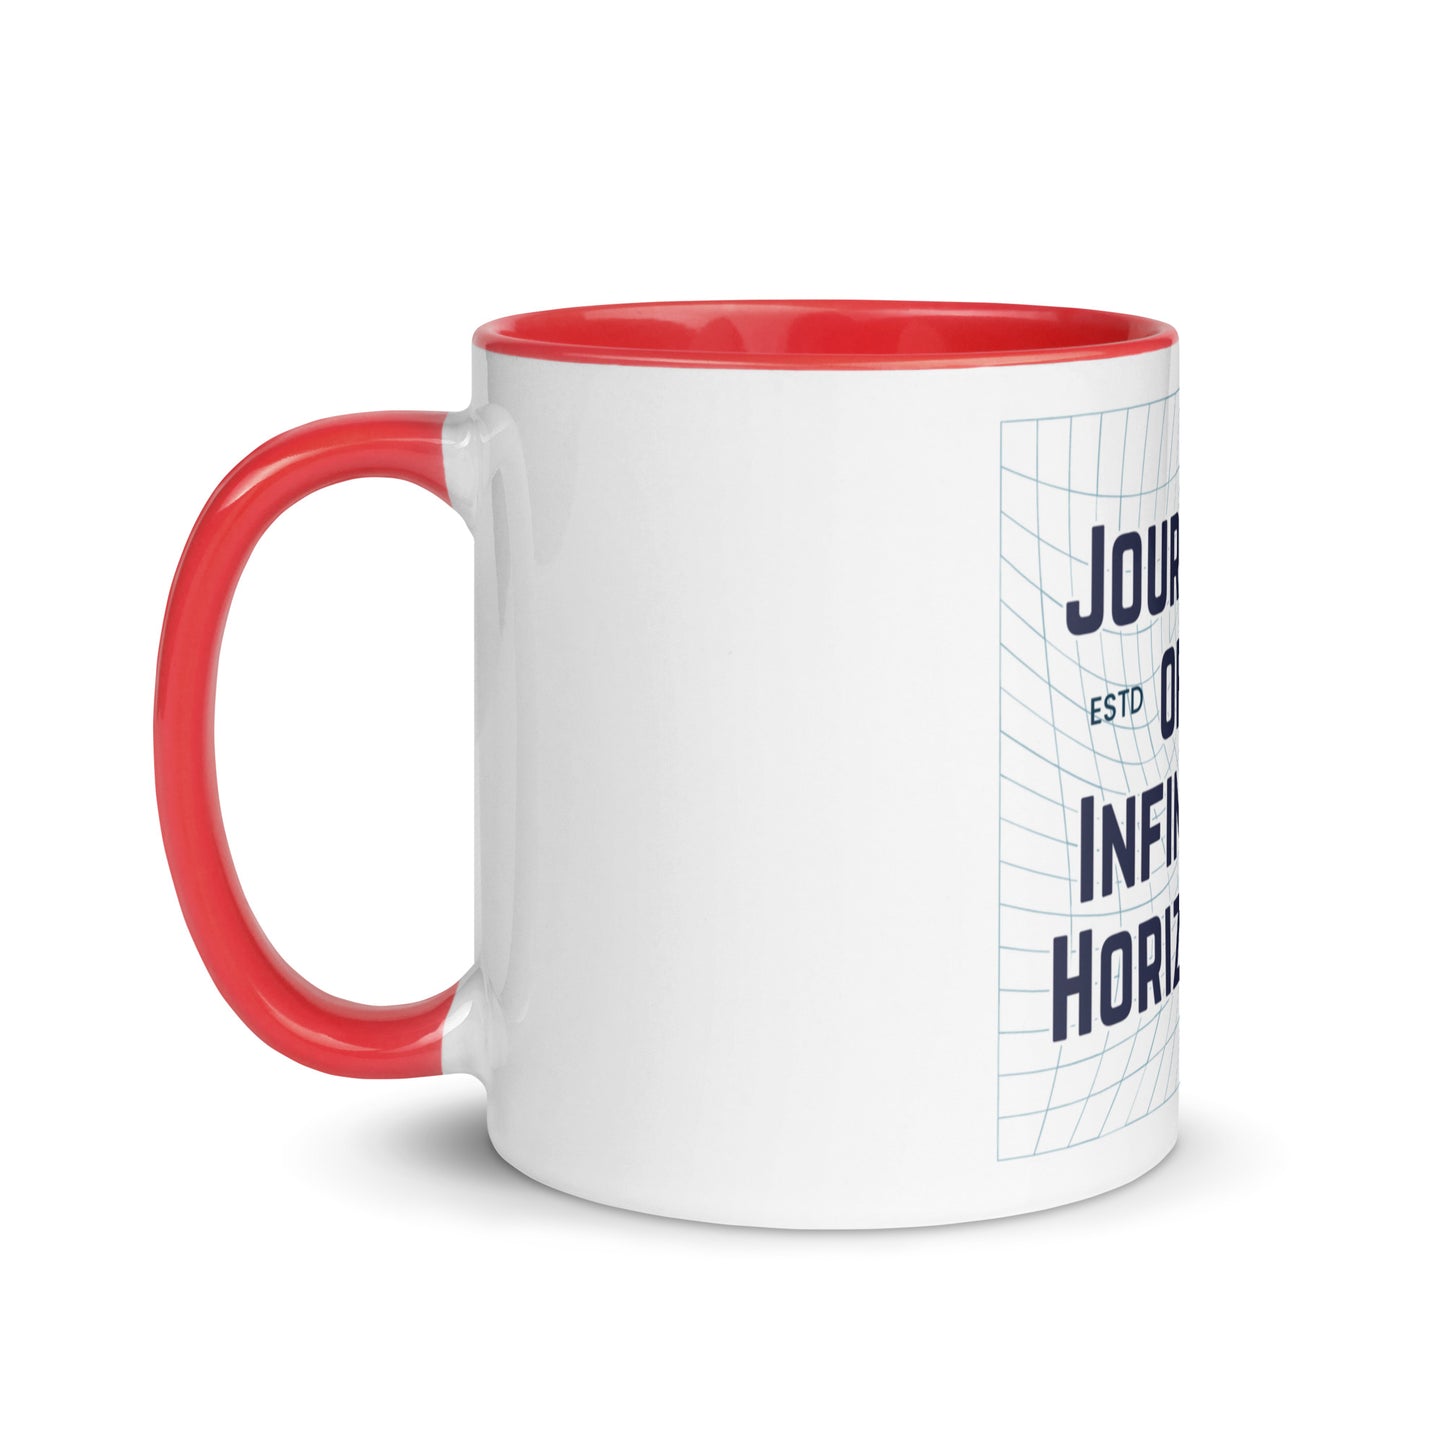 Mug with Color Inside Journey Of Infinite Horizons